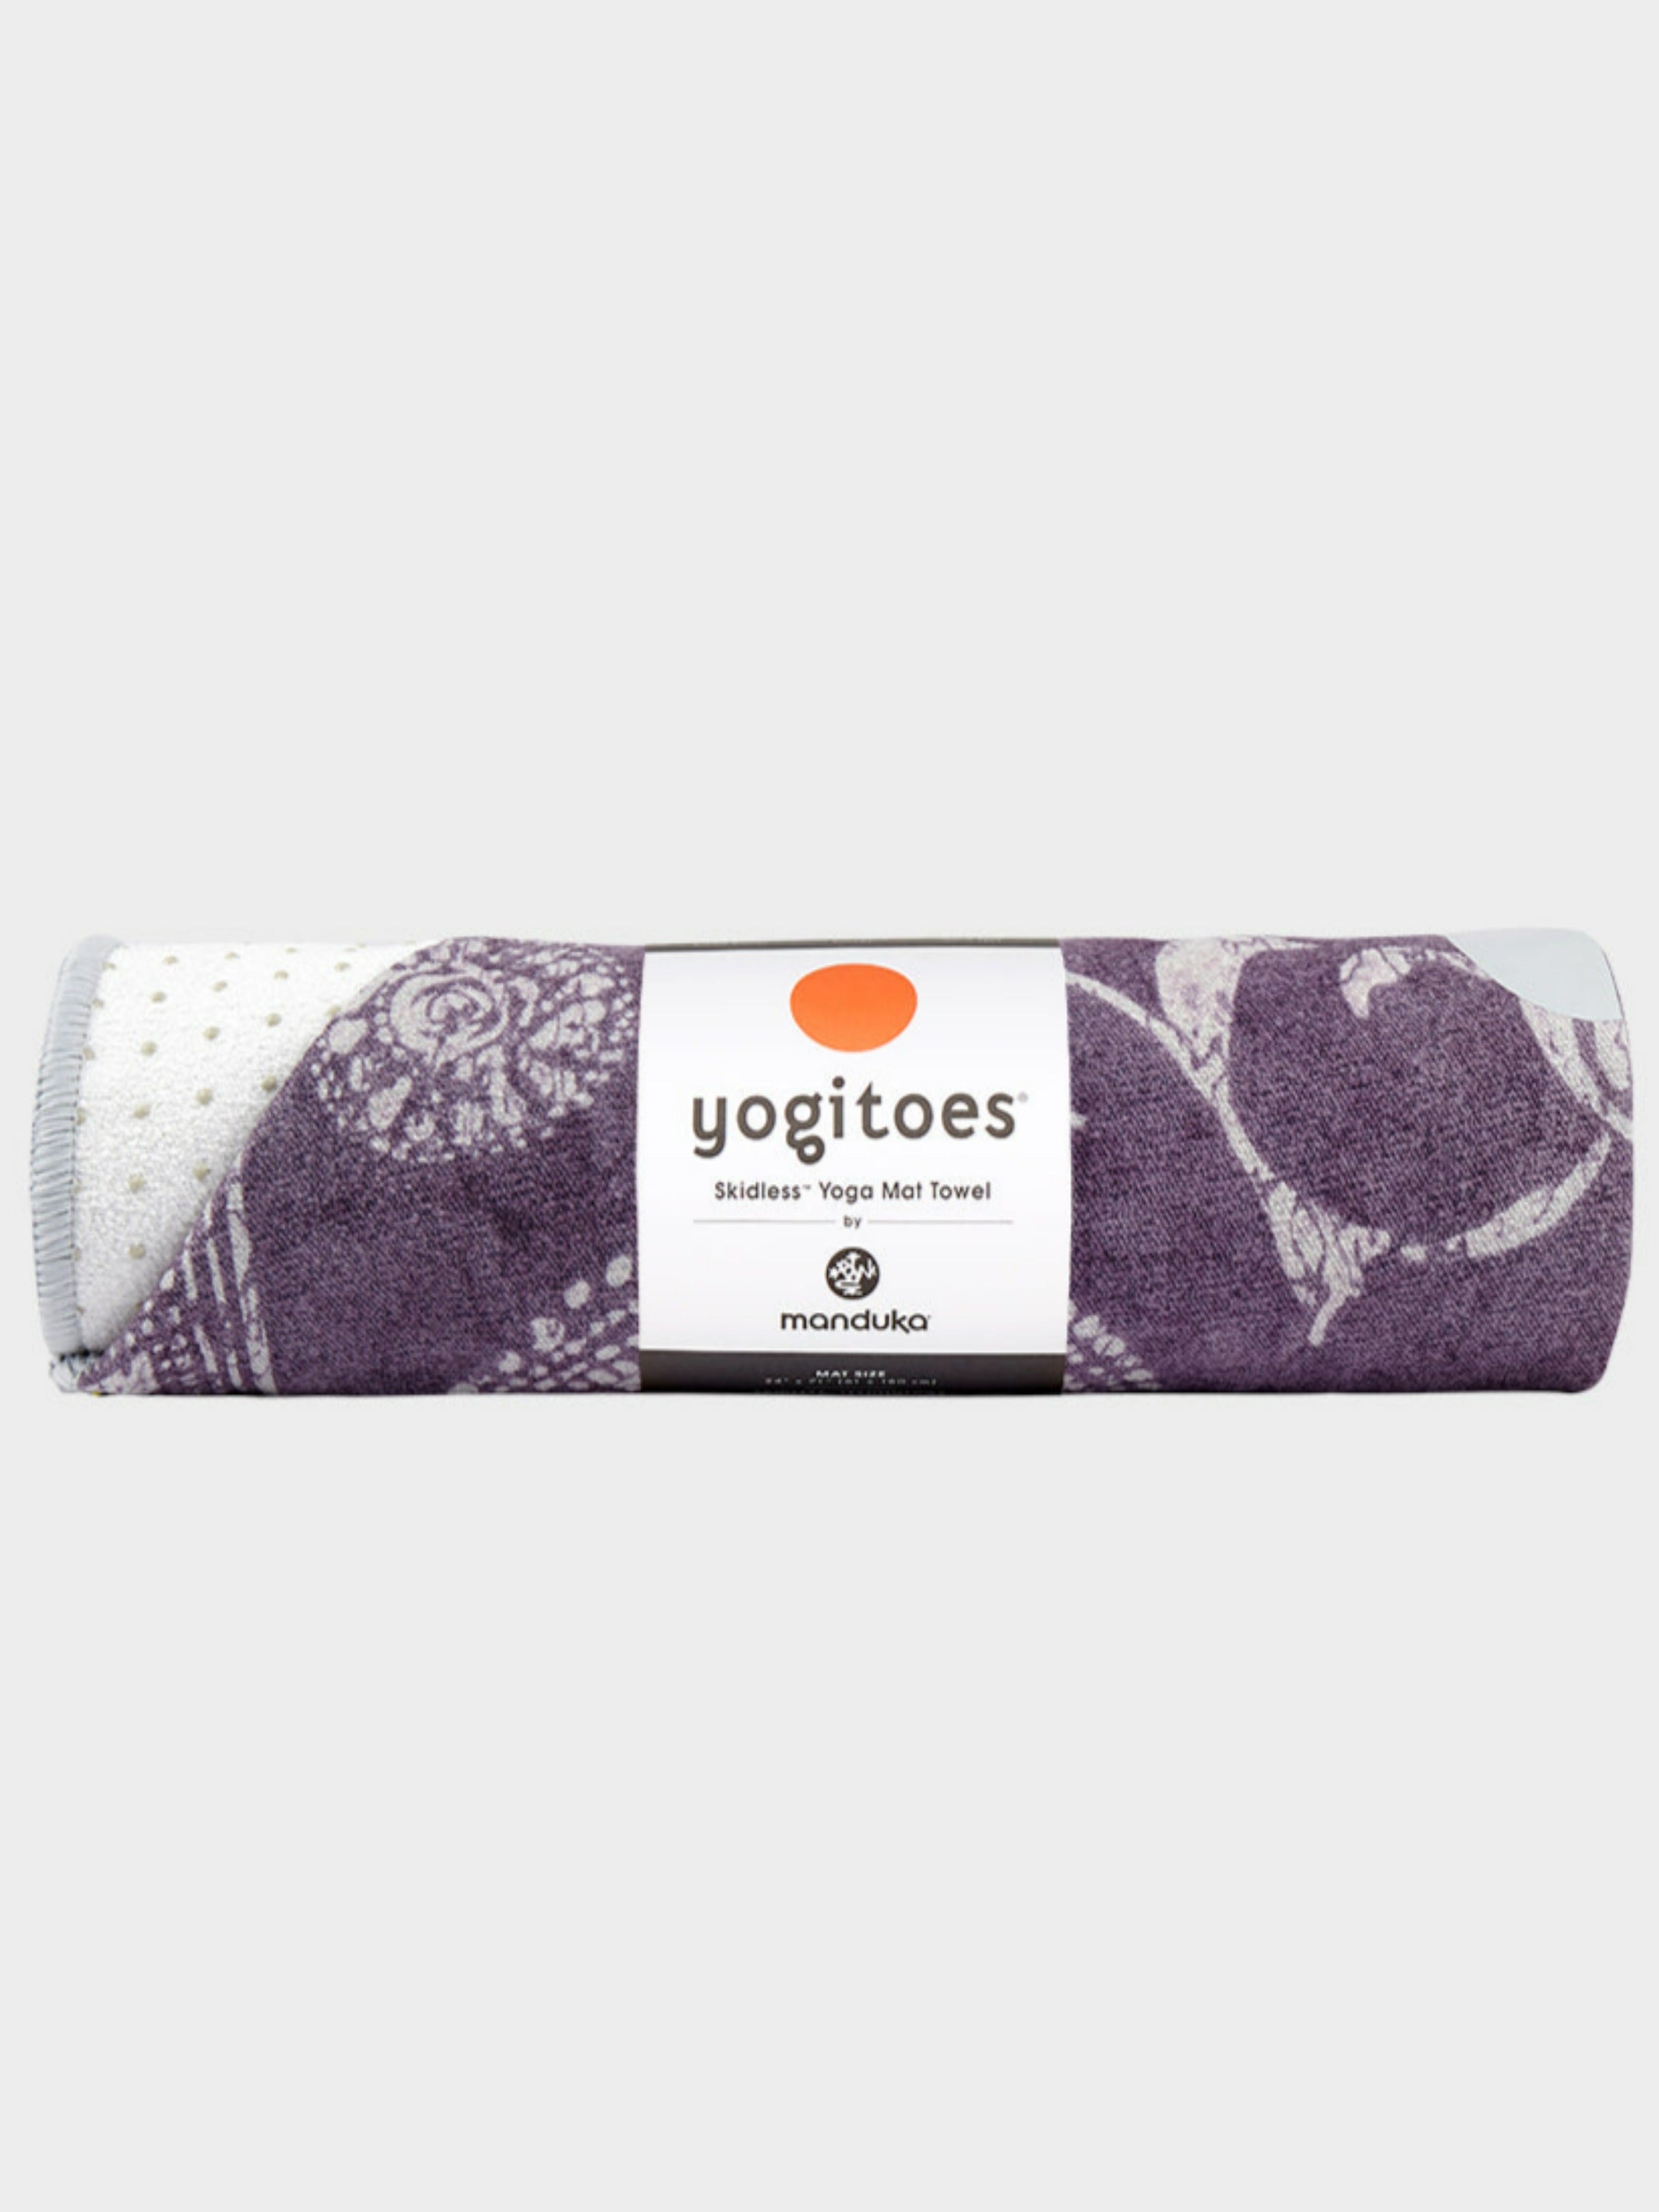 Yogitoes Skidless Yoga Mat Towel by Manduka